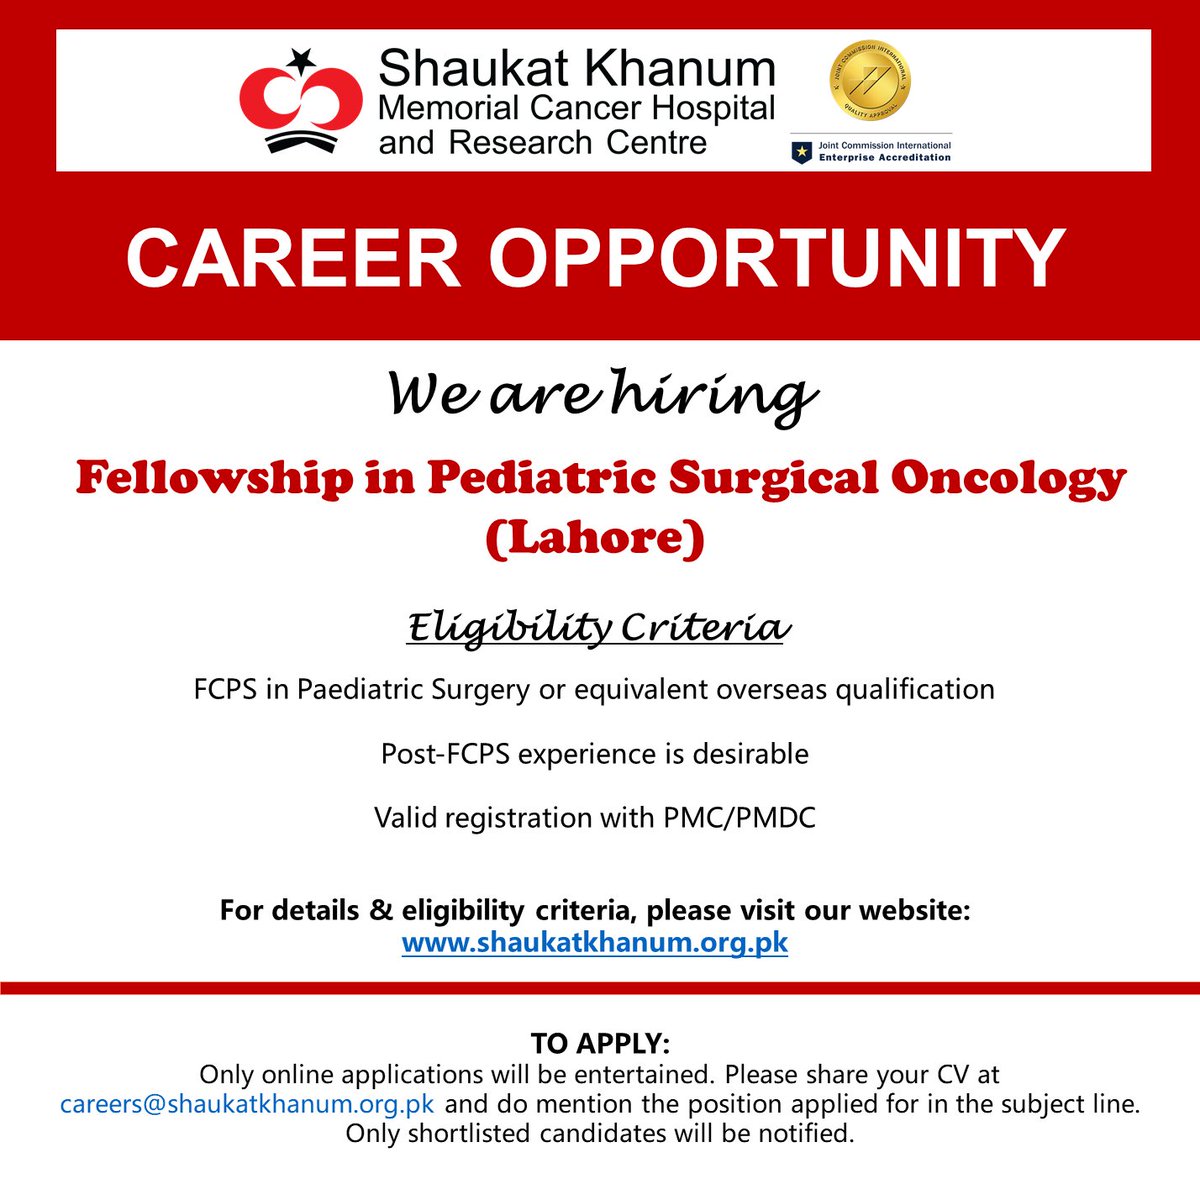 Career Opportunity at Shaukat Khanum Hospital, Lahore.
➡️ Fellowship in Pediatric Surgical Oncology (Lahore)

For details, visit: shaukatkhanum.org.pk/join-us/curren…

📞 +92 42 3590 5000 Ext.3028, 3037, 3038, 3041, 3057
✉️ careers@shaukatkhanum.org.pk

#CareersAtSKMCH #JobsInLahore